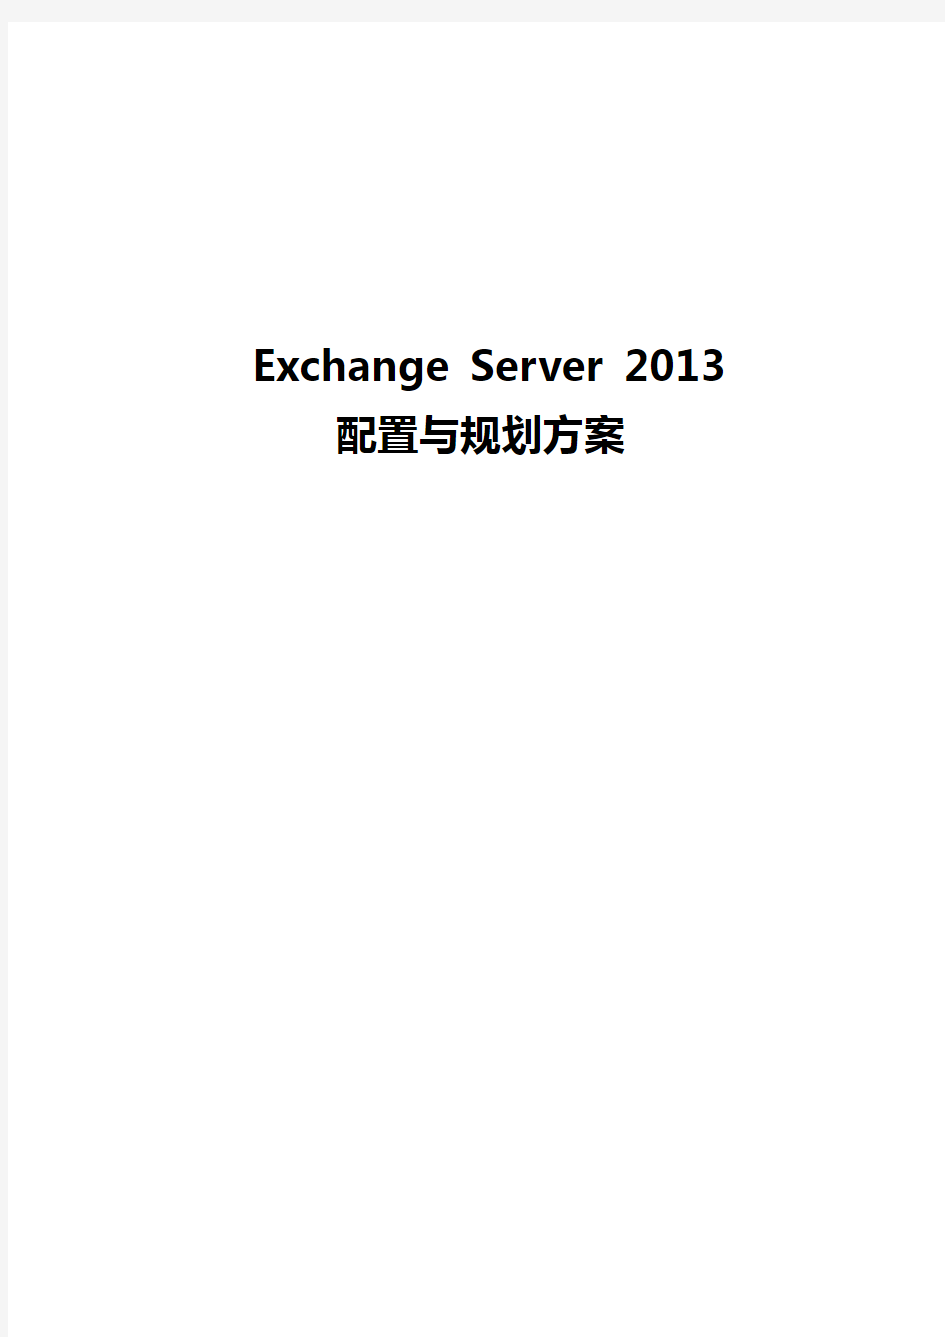 Exchange2013配置与规划方案_V1.0